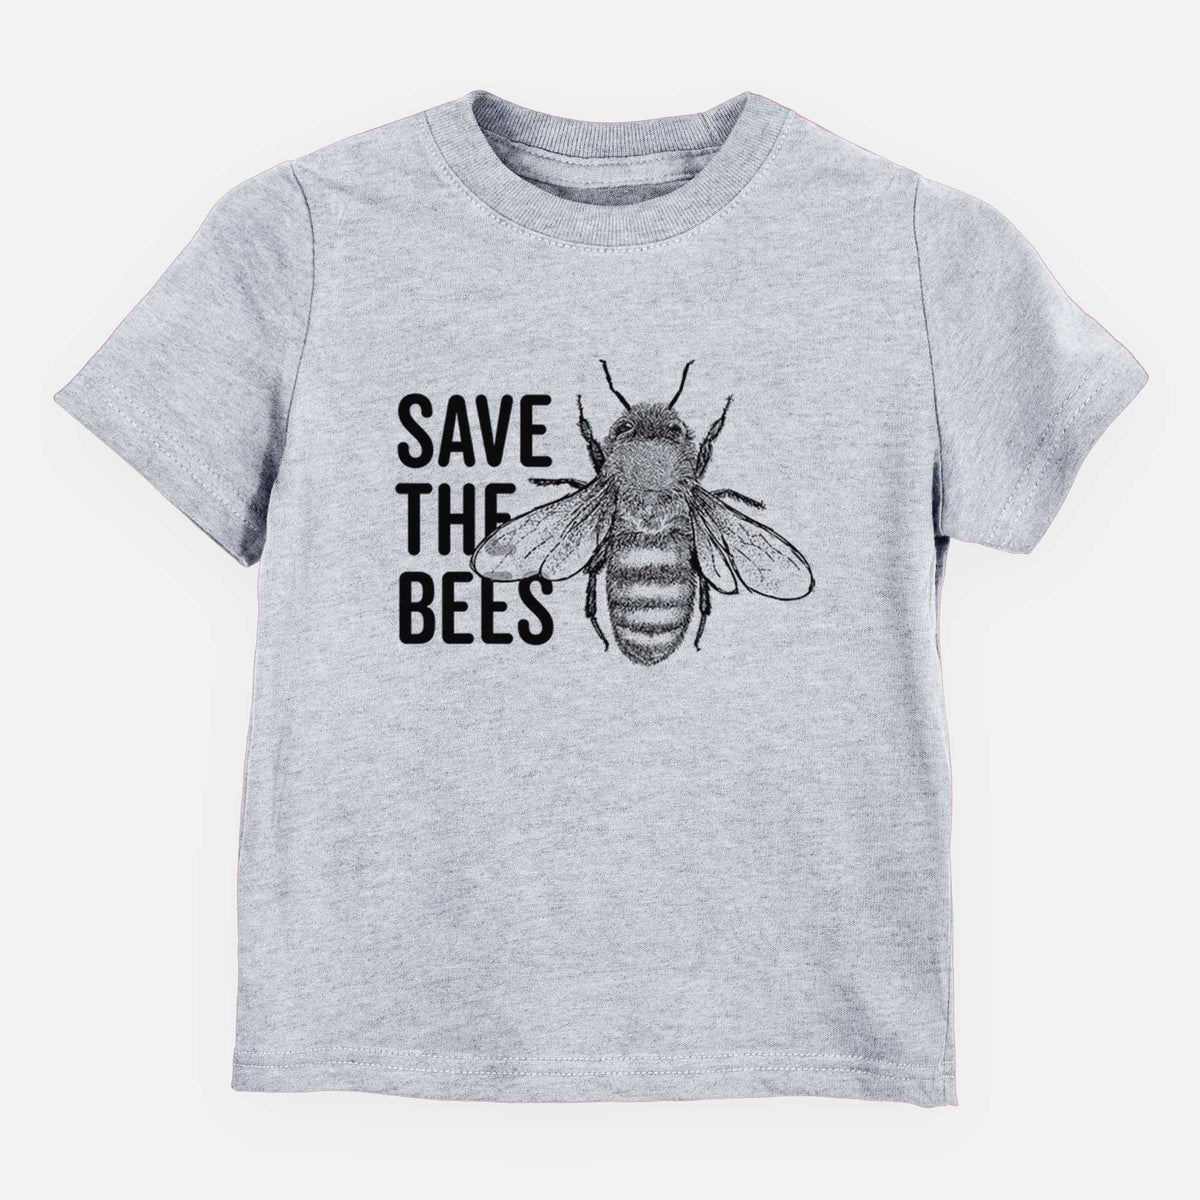 Save the Bees - Kids Shirt